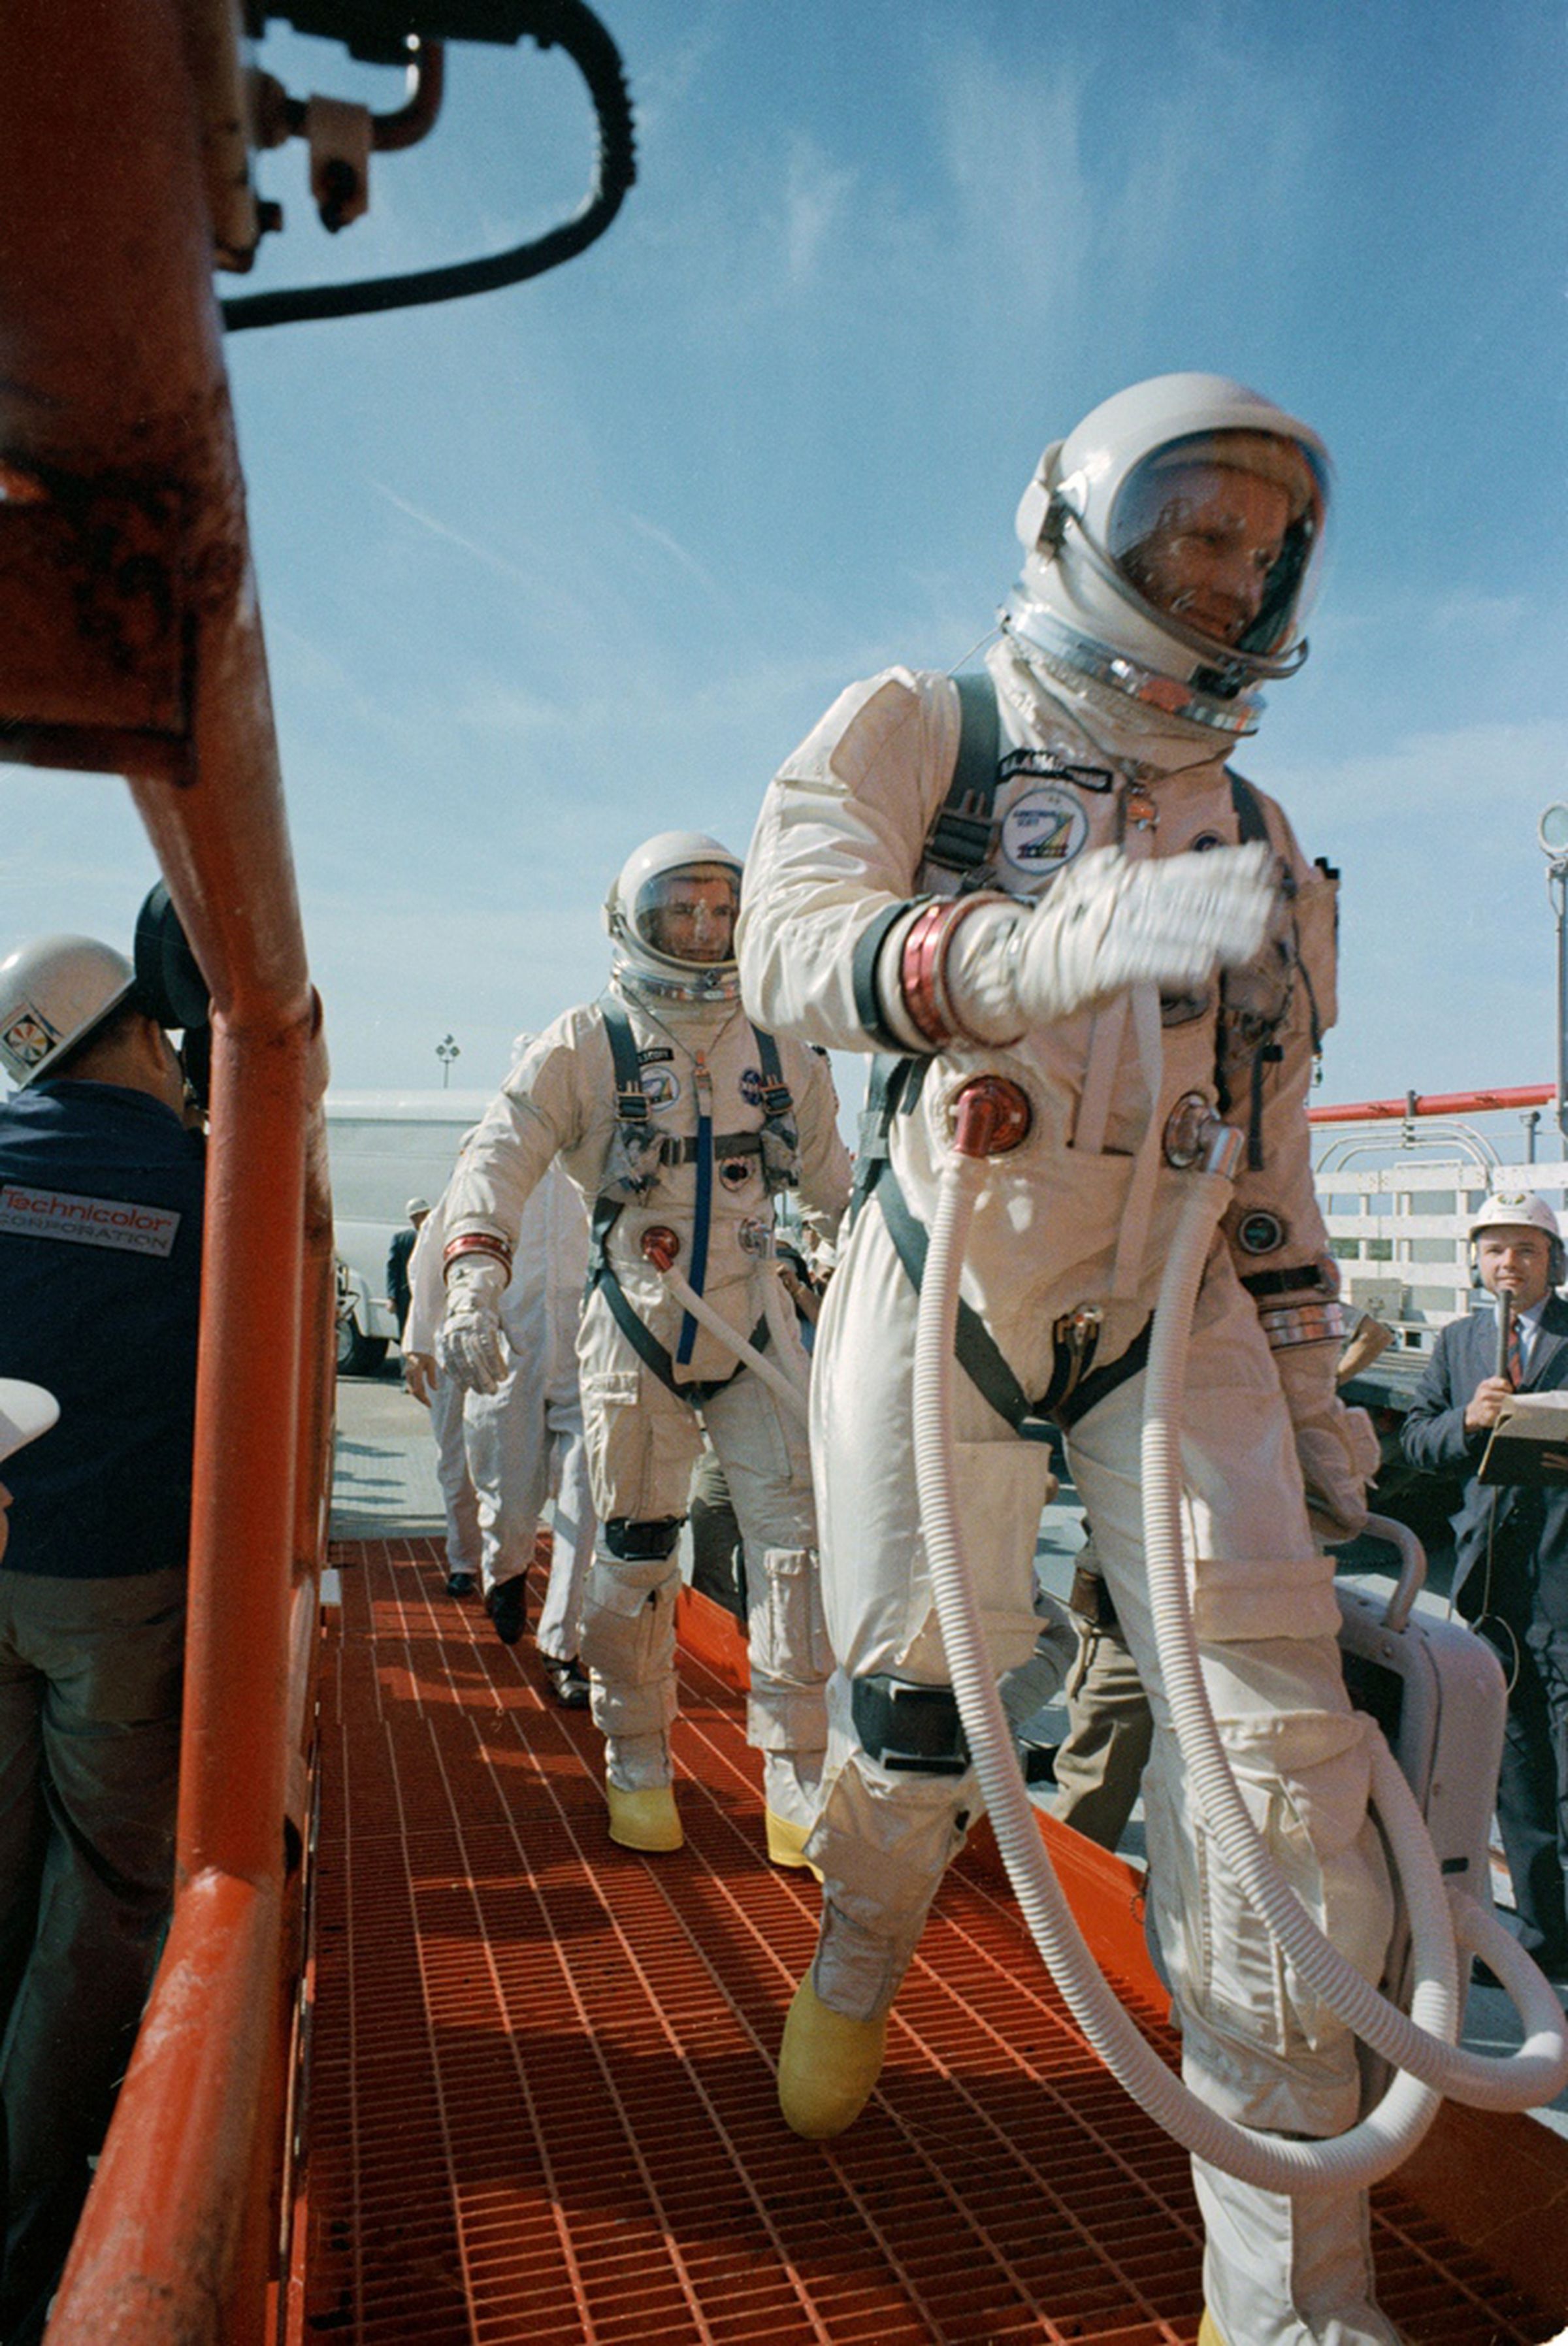 Astronaut Neil Armstrong, 1930-2012